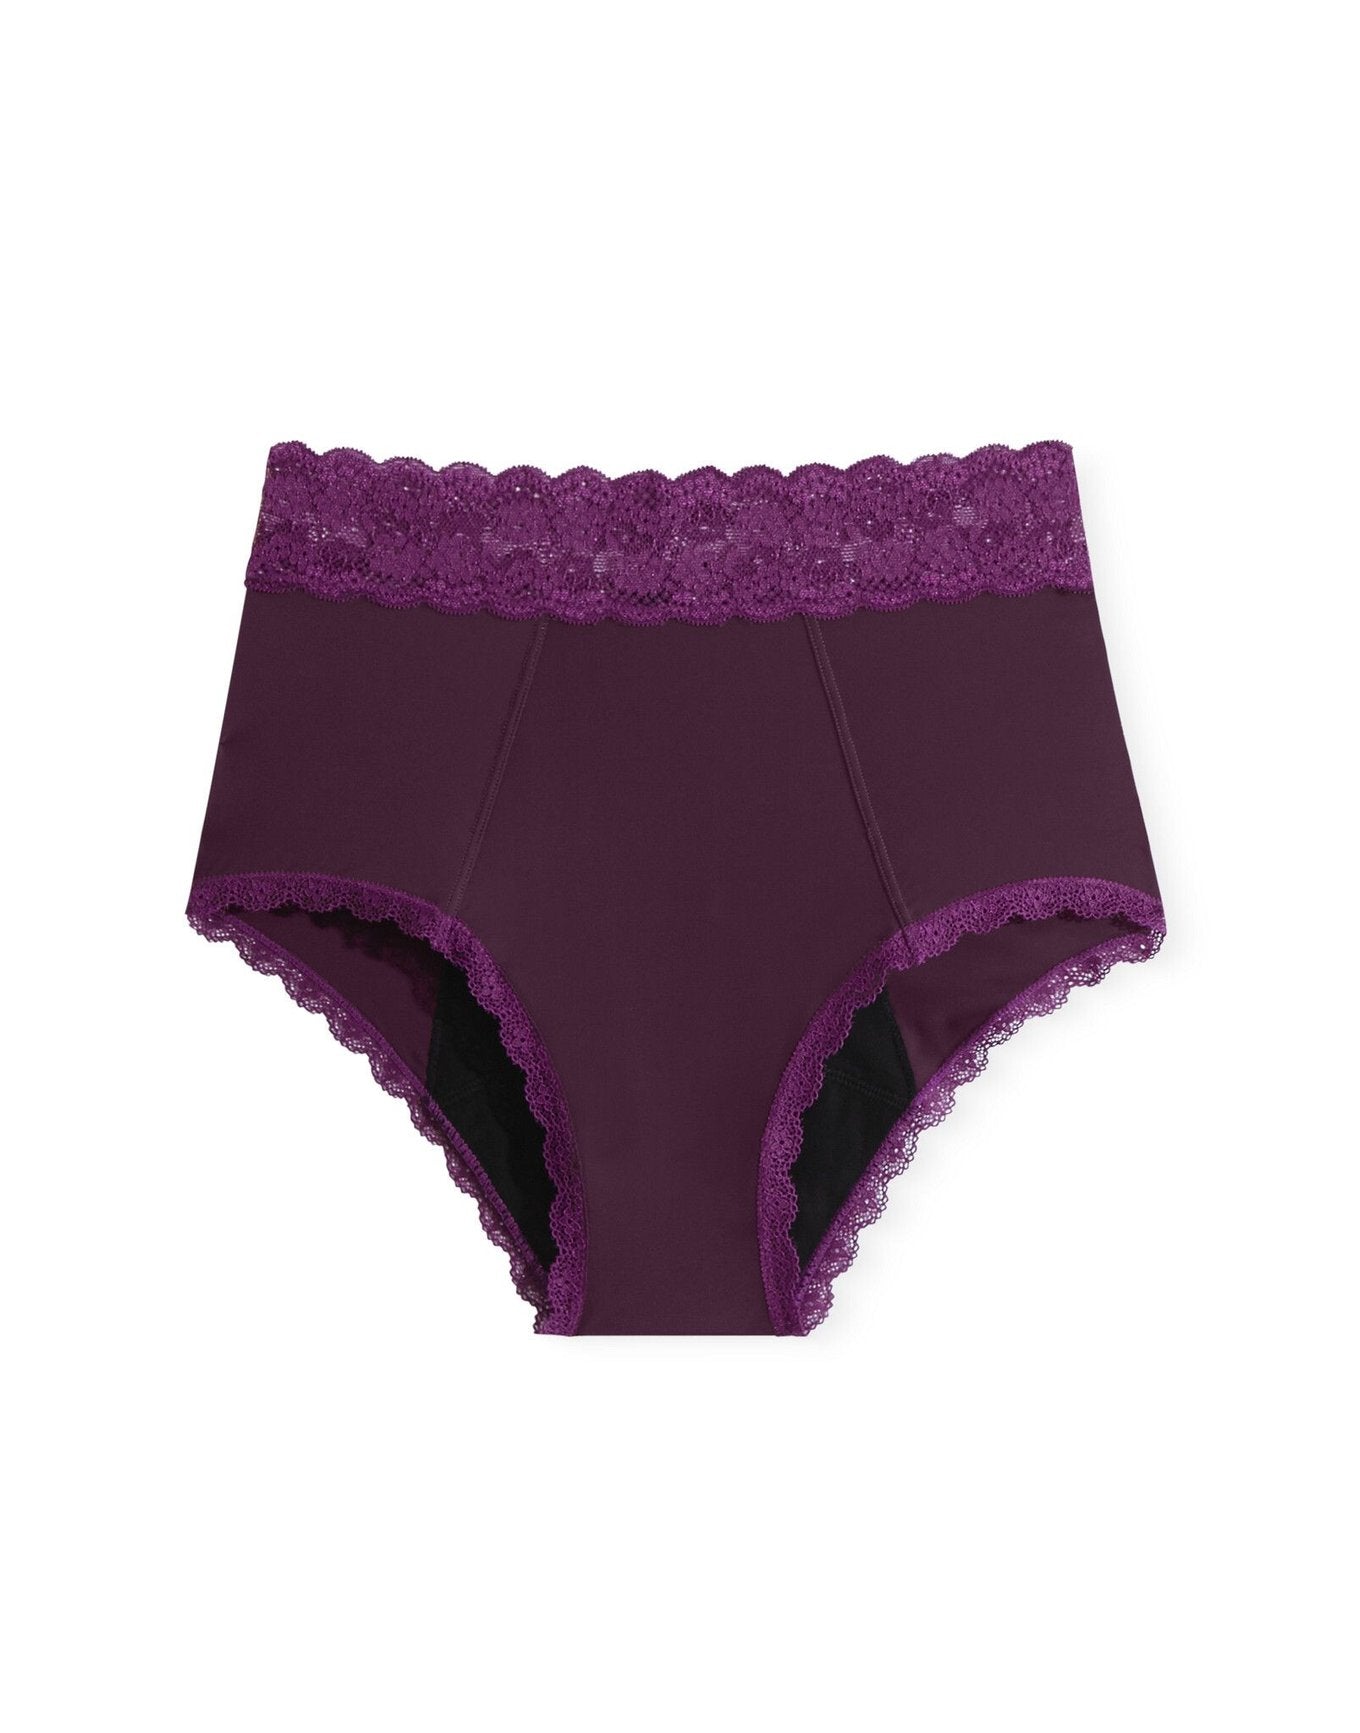 Joyja Amelia period-proof panty in color Potent Purple and shape high waisted